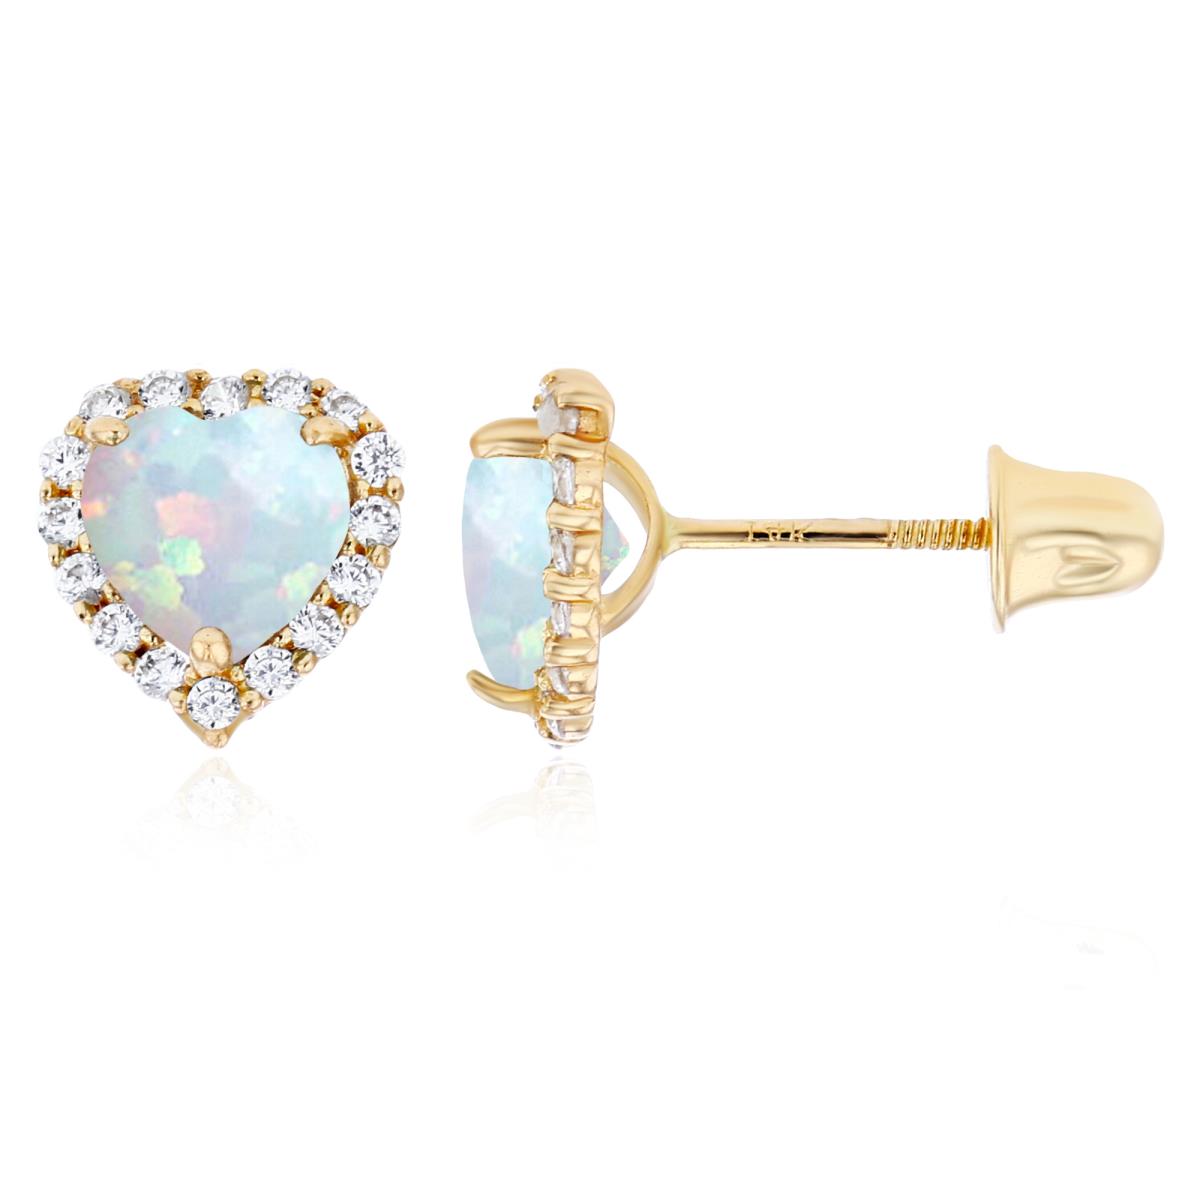 14K Yellow Gold 5mm Heart Created Opal & 1mm Created White Sapphire Halo Screwback Earrings